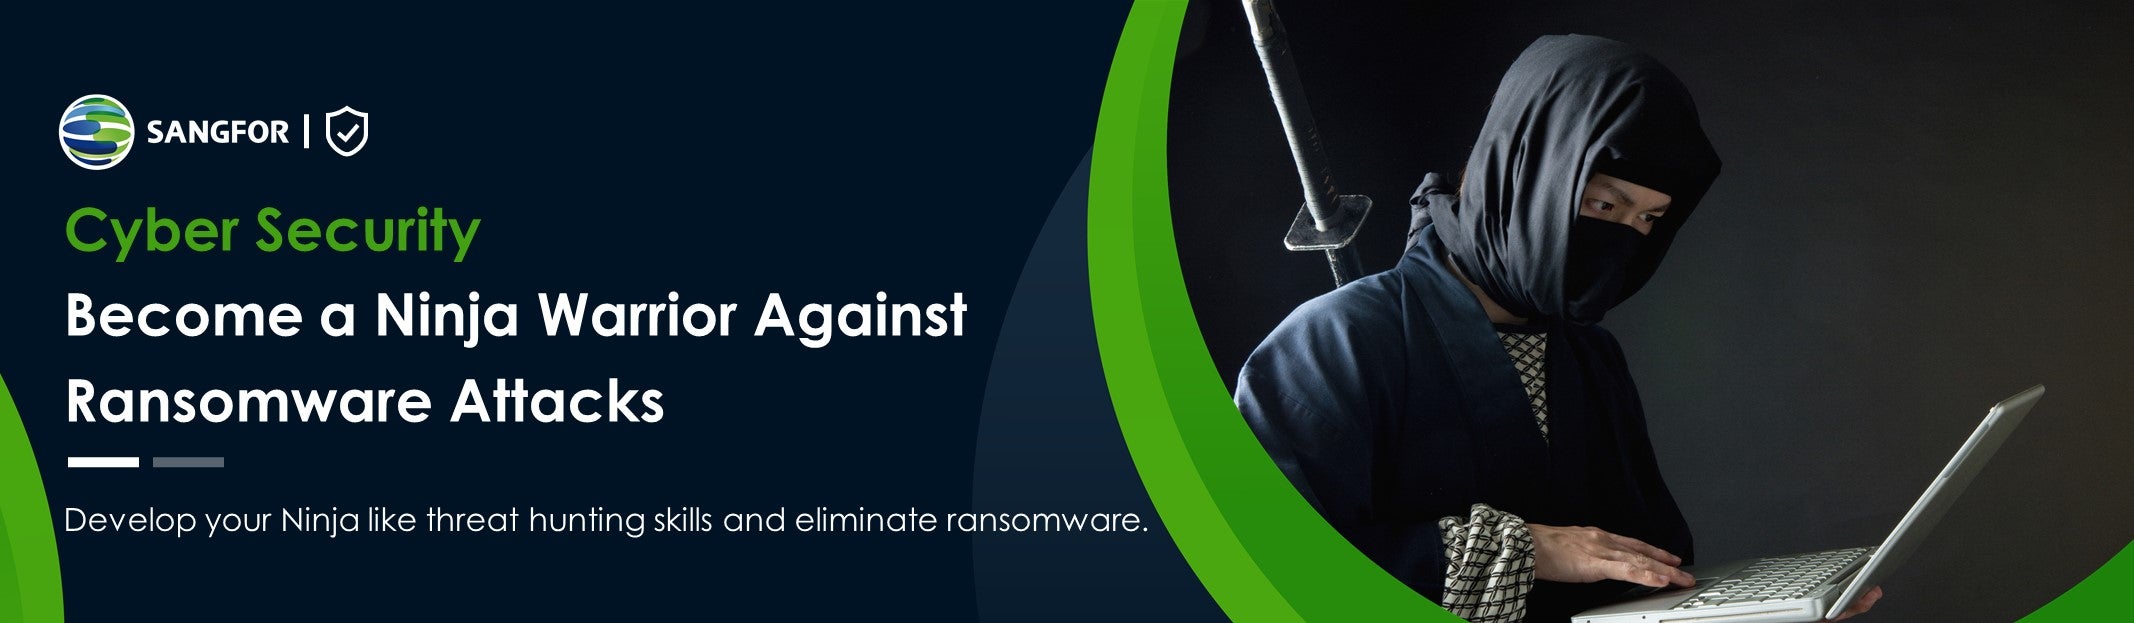 Ninja Warrior Against Ransomware Attacks Article